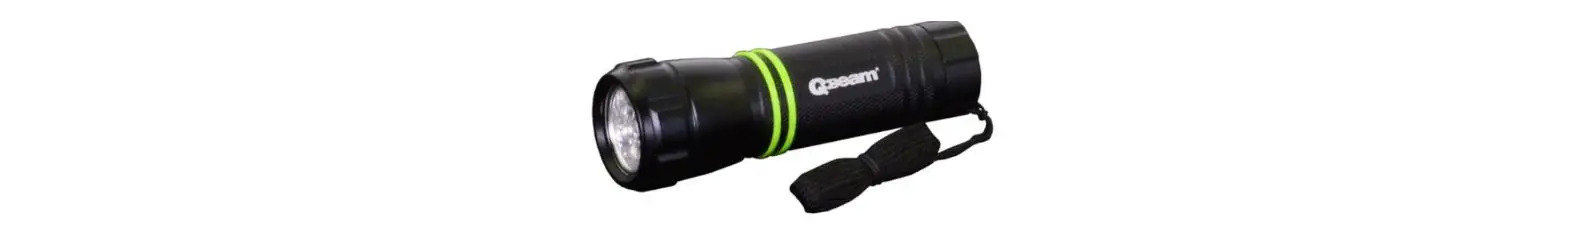 Q-BEAM Brightsmith Max 14 LED Aluminum Flashlight